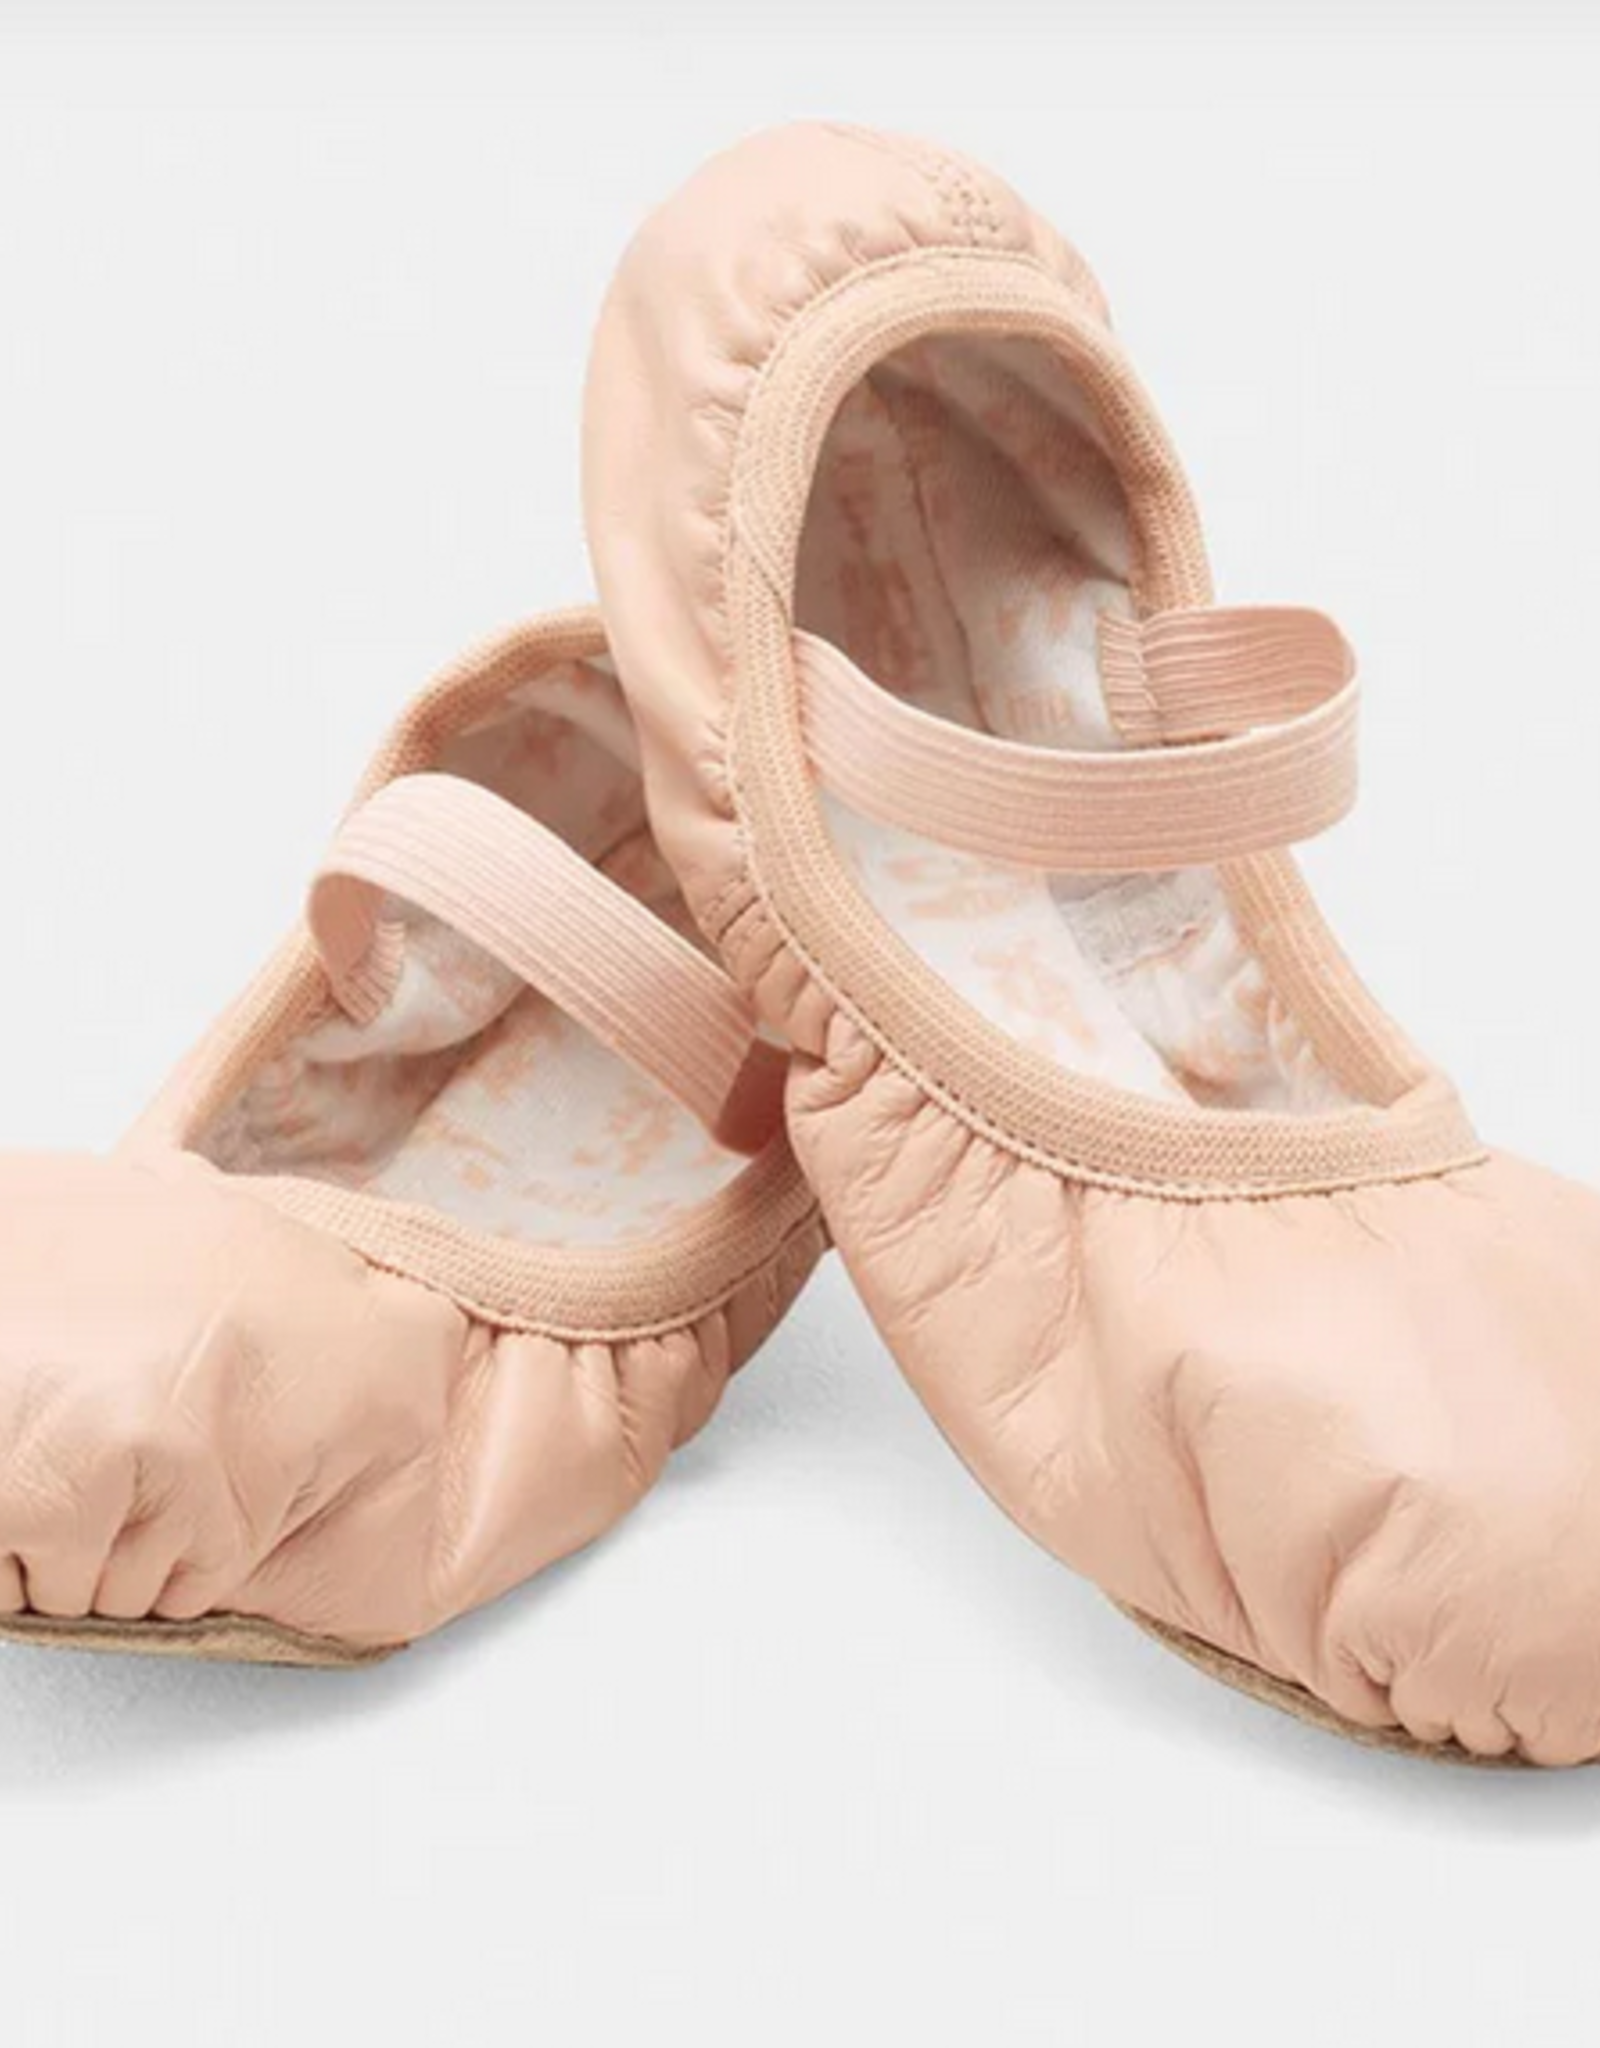 Bloch S0249G Giselle Leather Ballet Slipper Youth